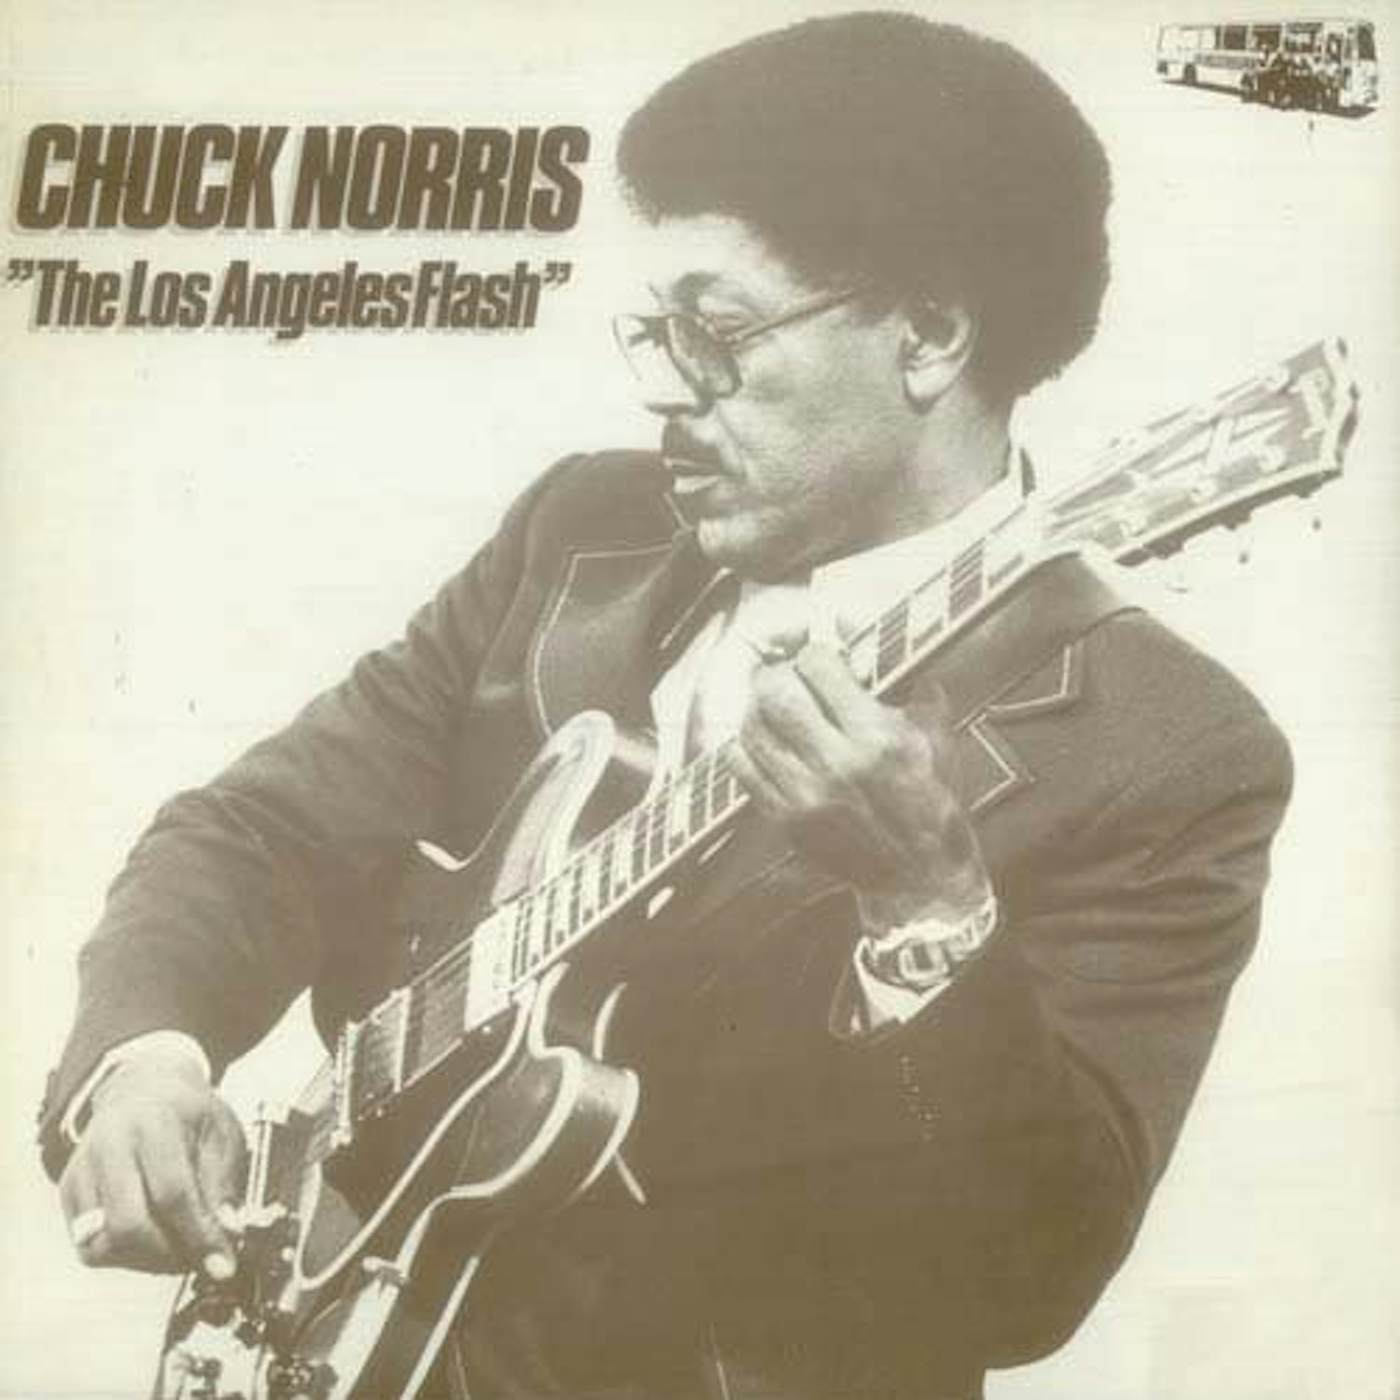 Chuck Norris LOS ANGELES FLASH 1980 Vinyl Record